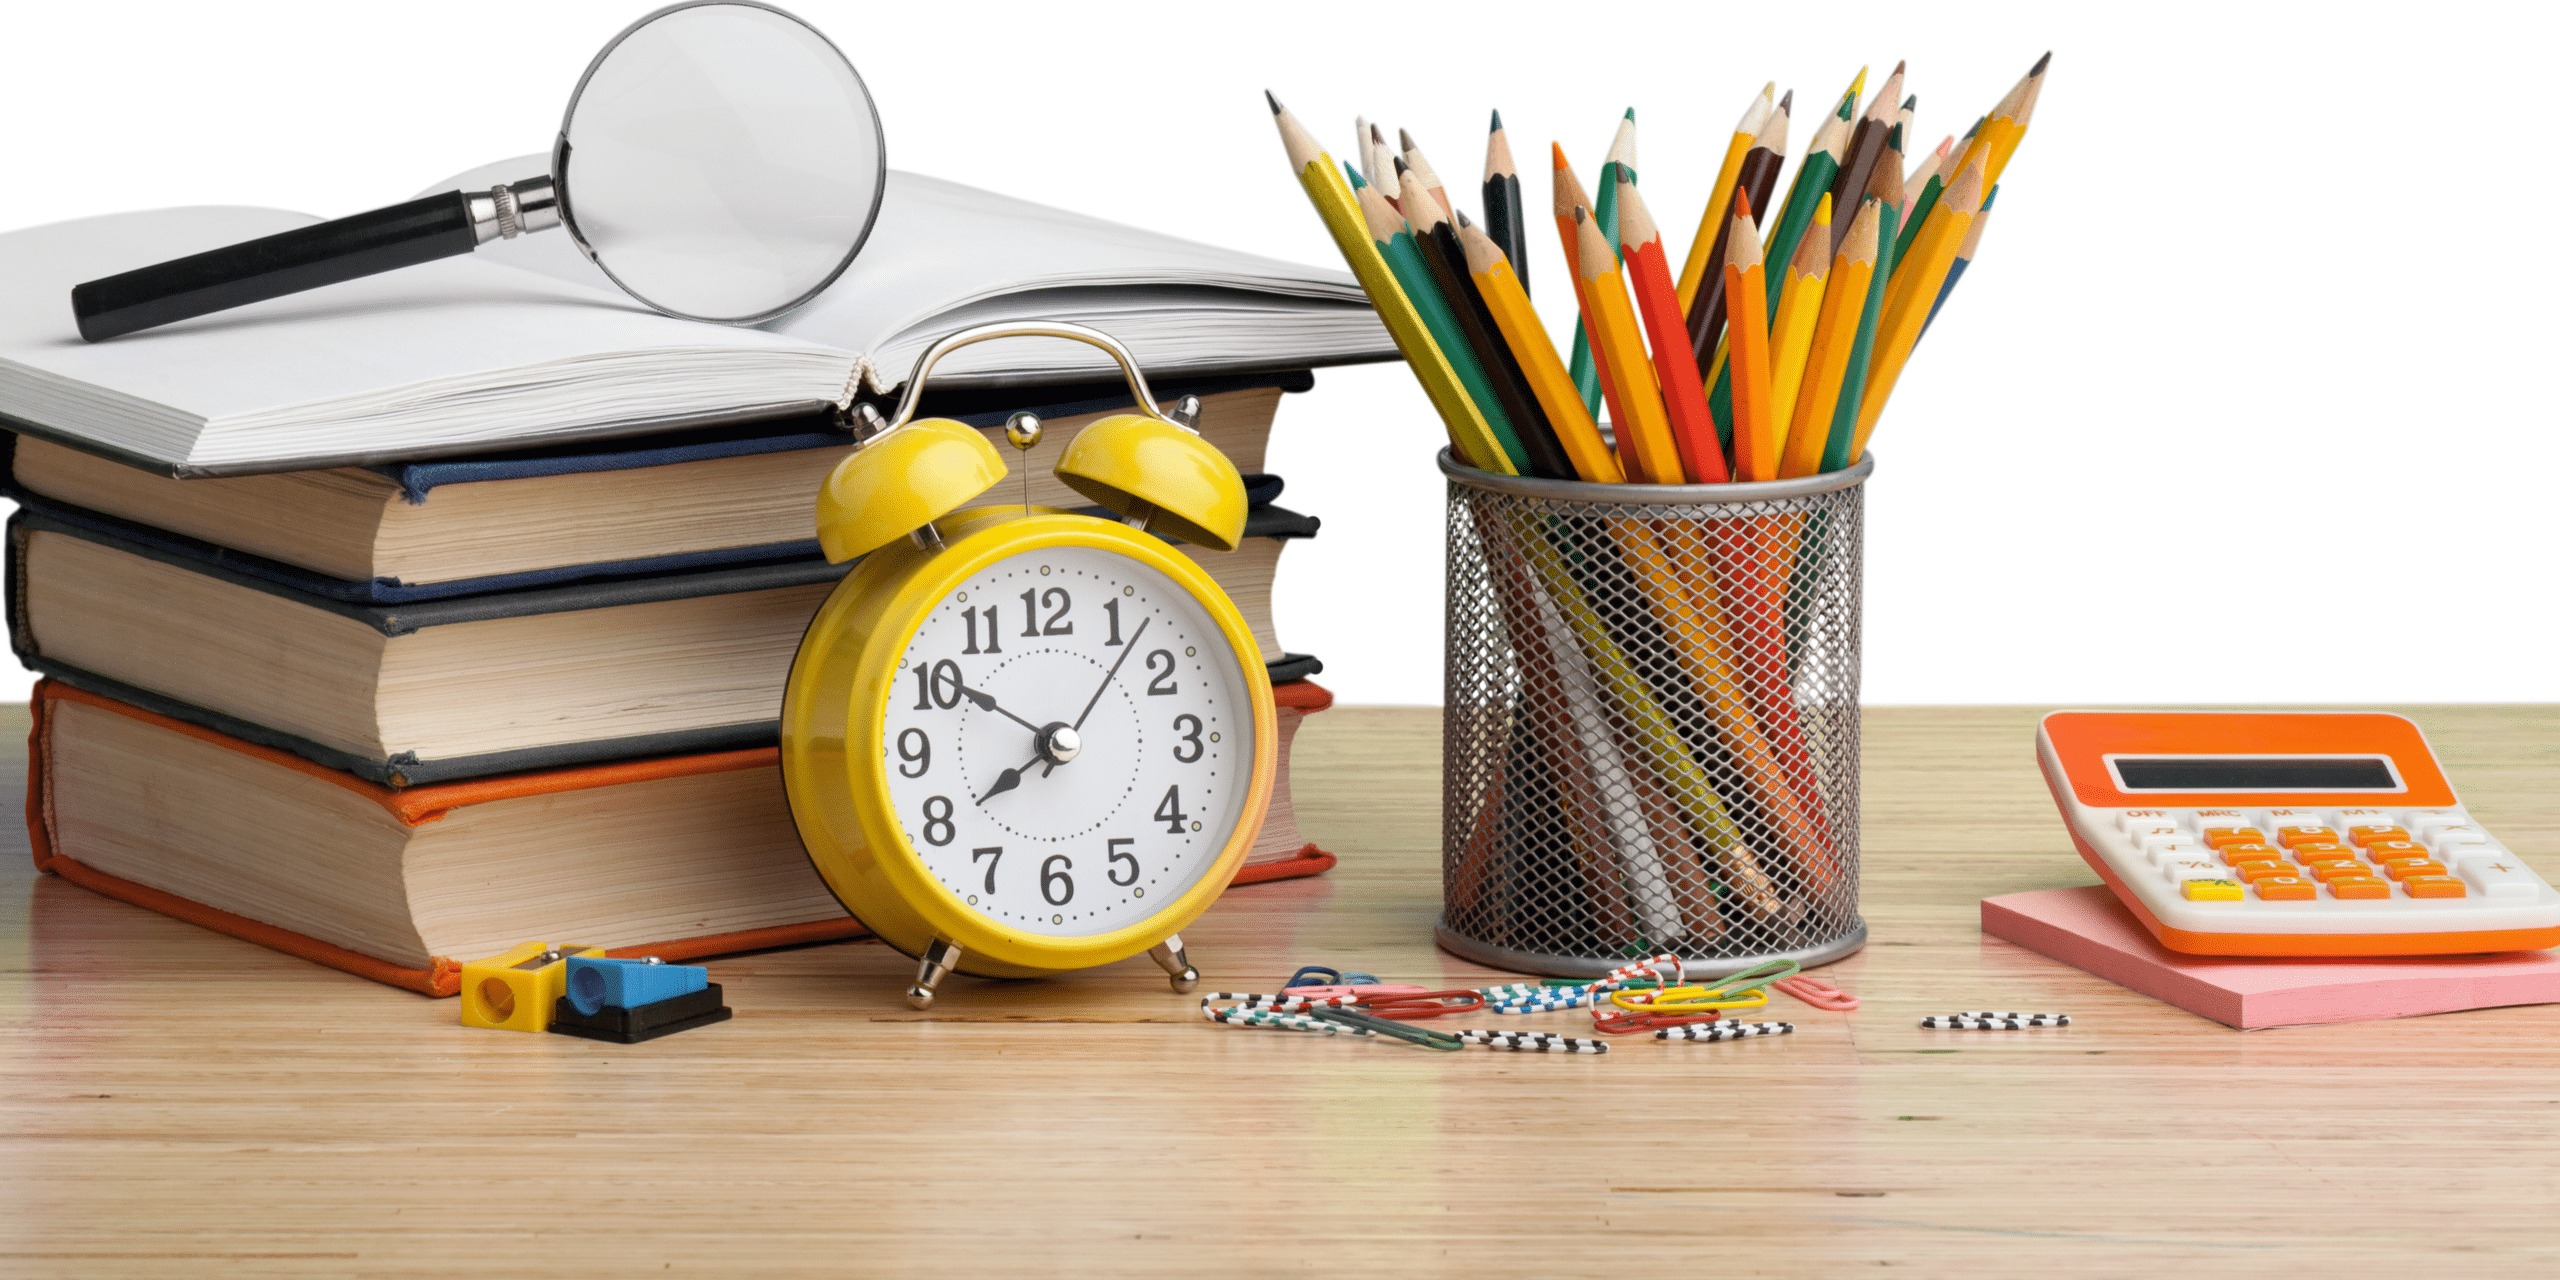 Books, clock, pencils, and a calculator on a desk.